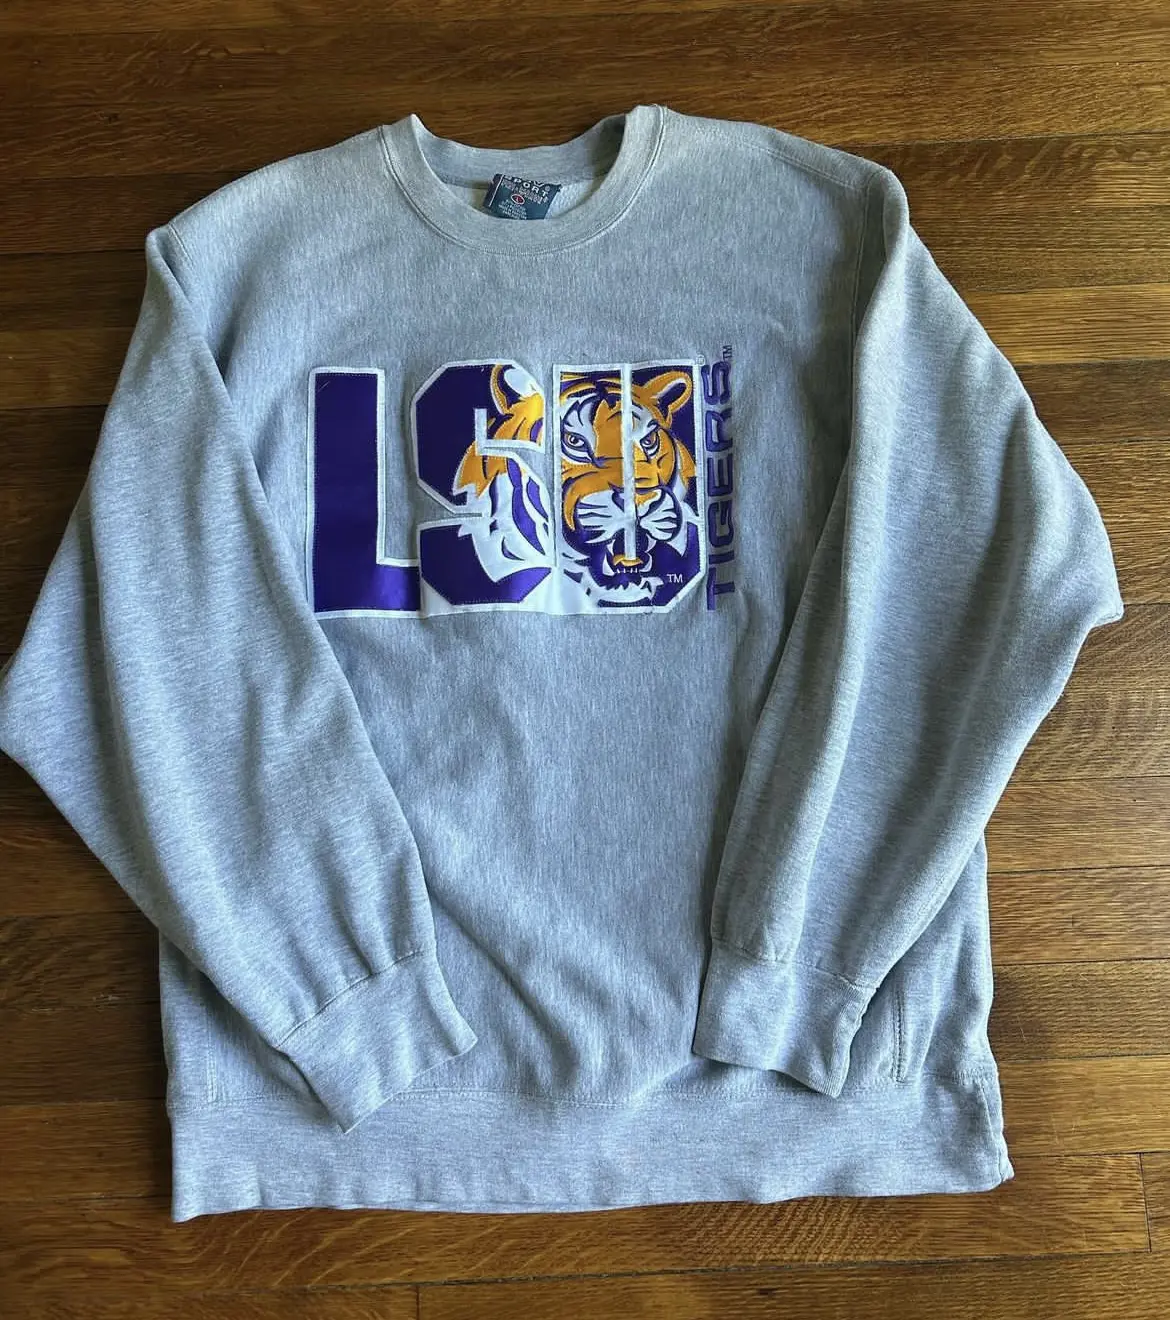 Vintage LSU Sweater